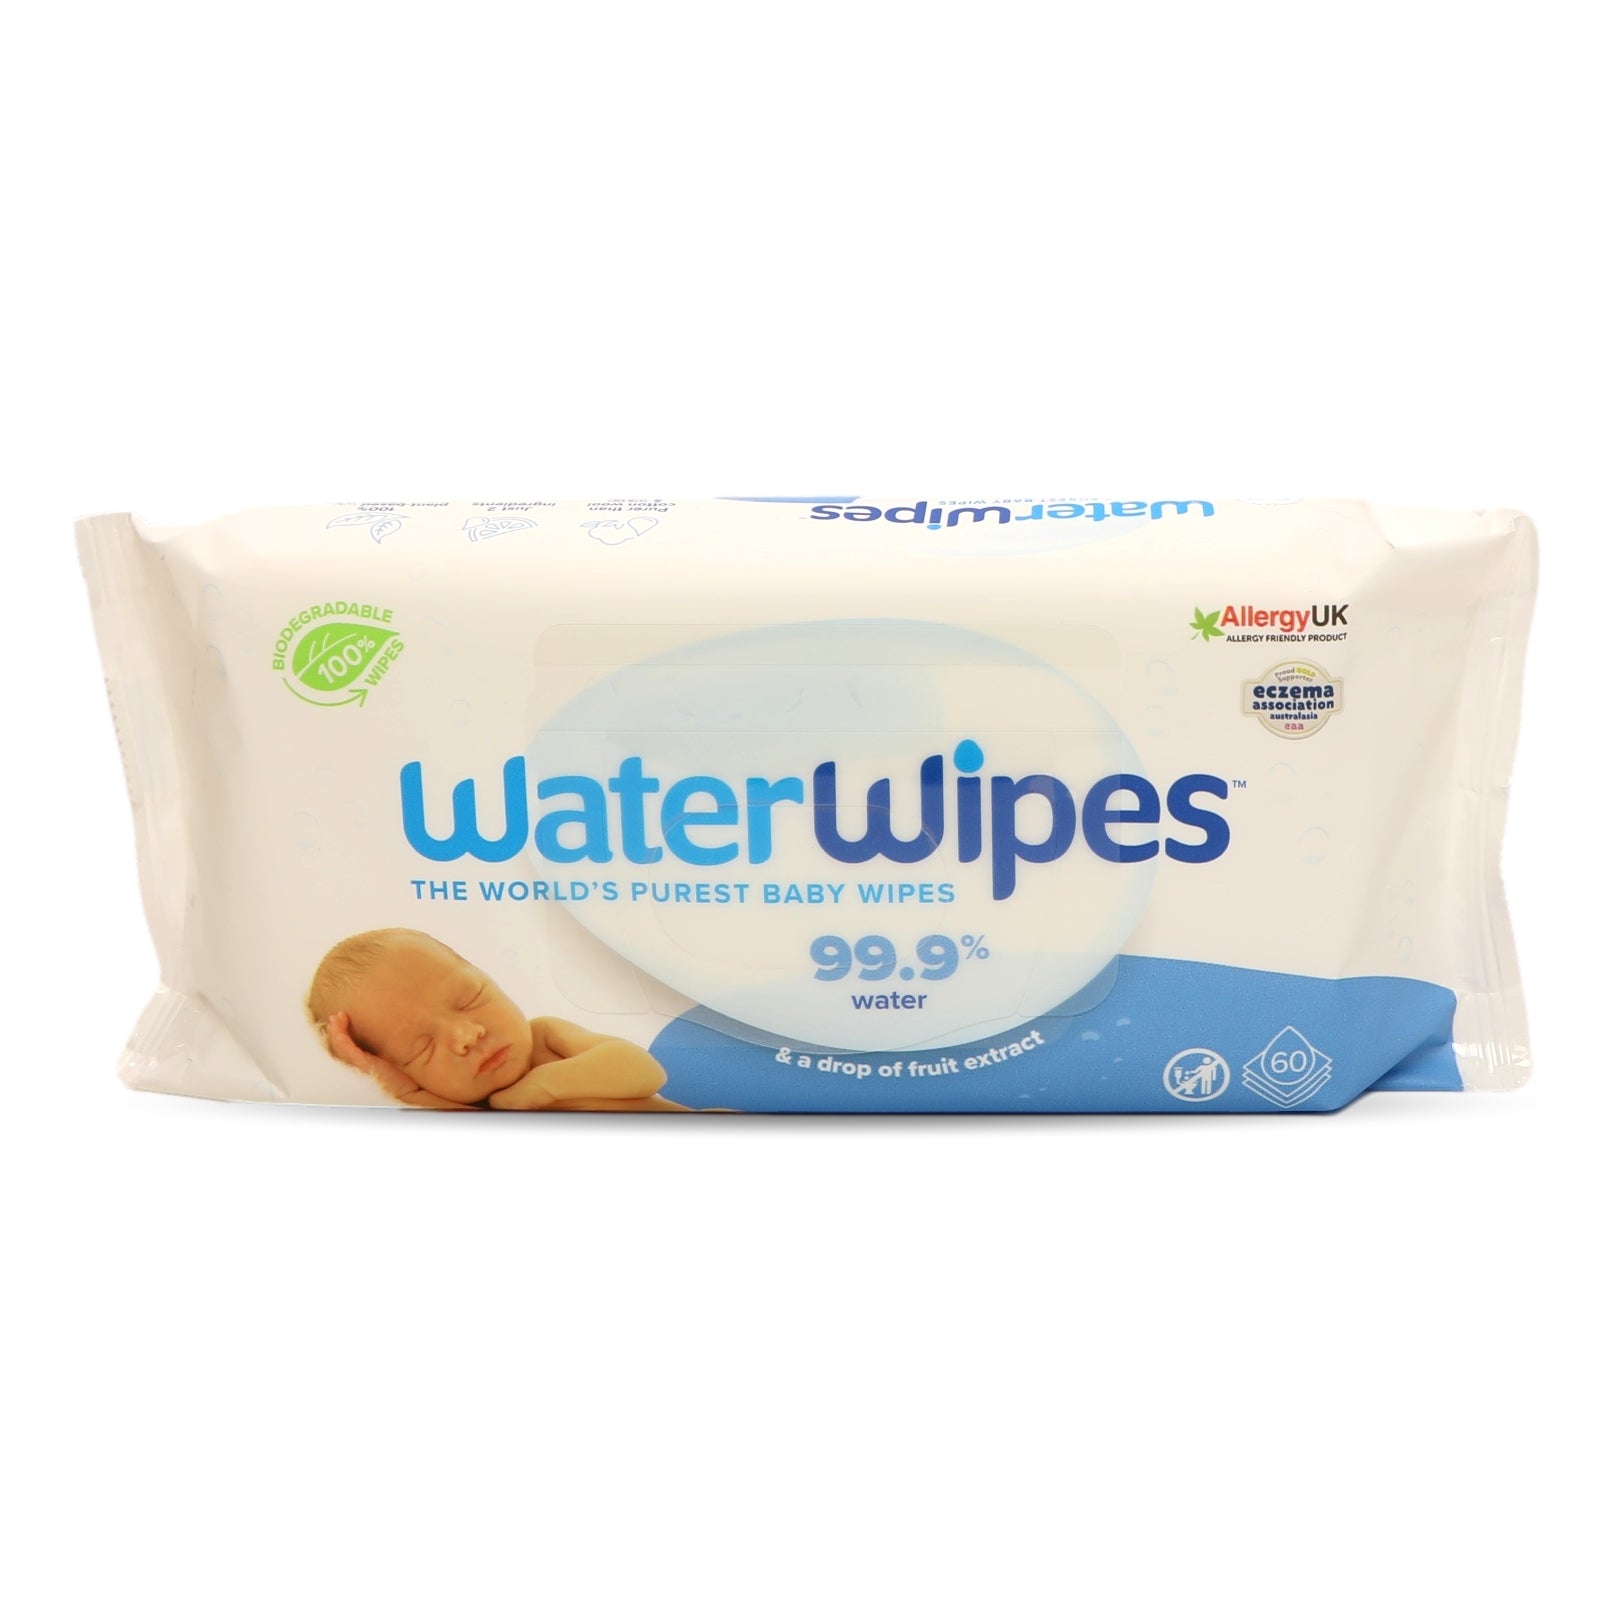 Waterwipes Bio Baby Wipes 60's Sensitive